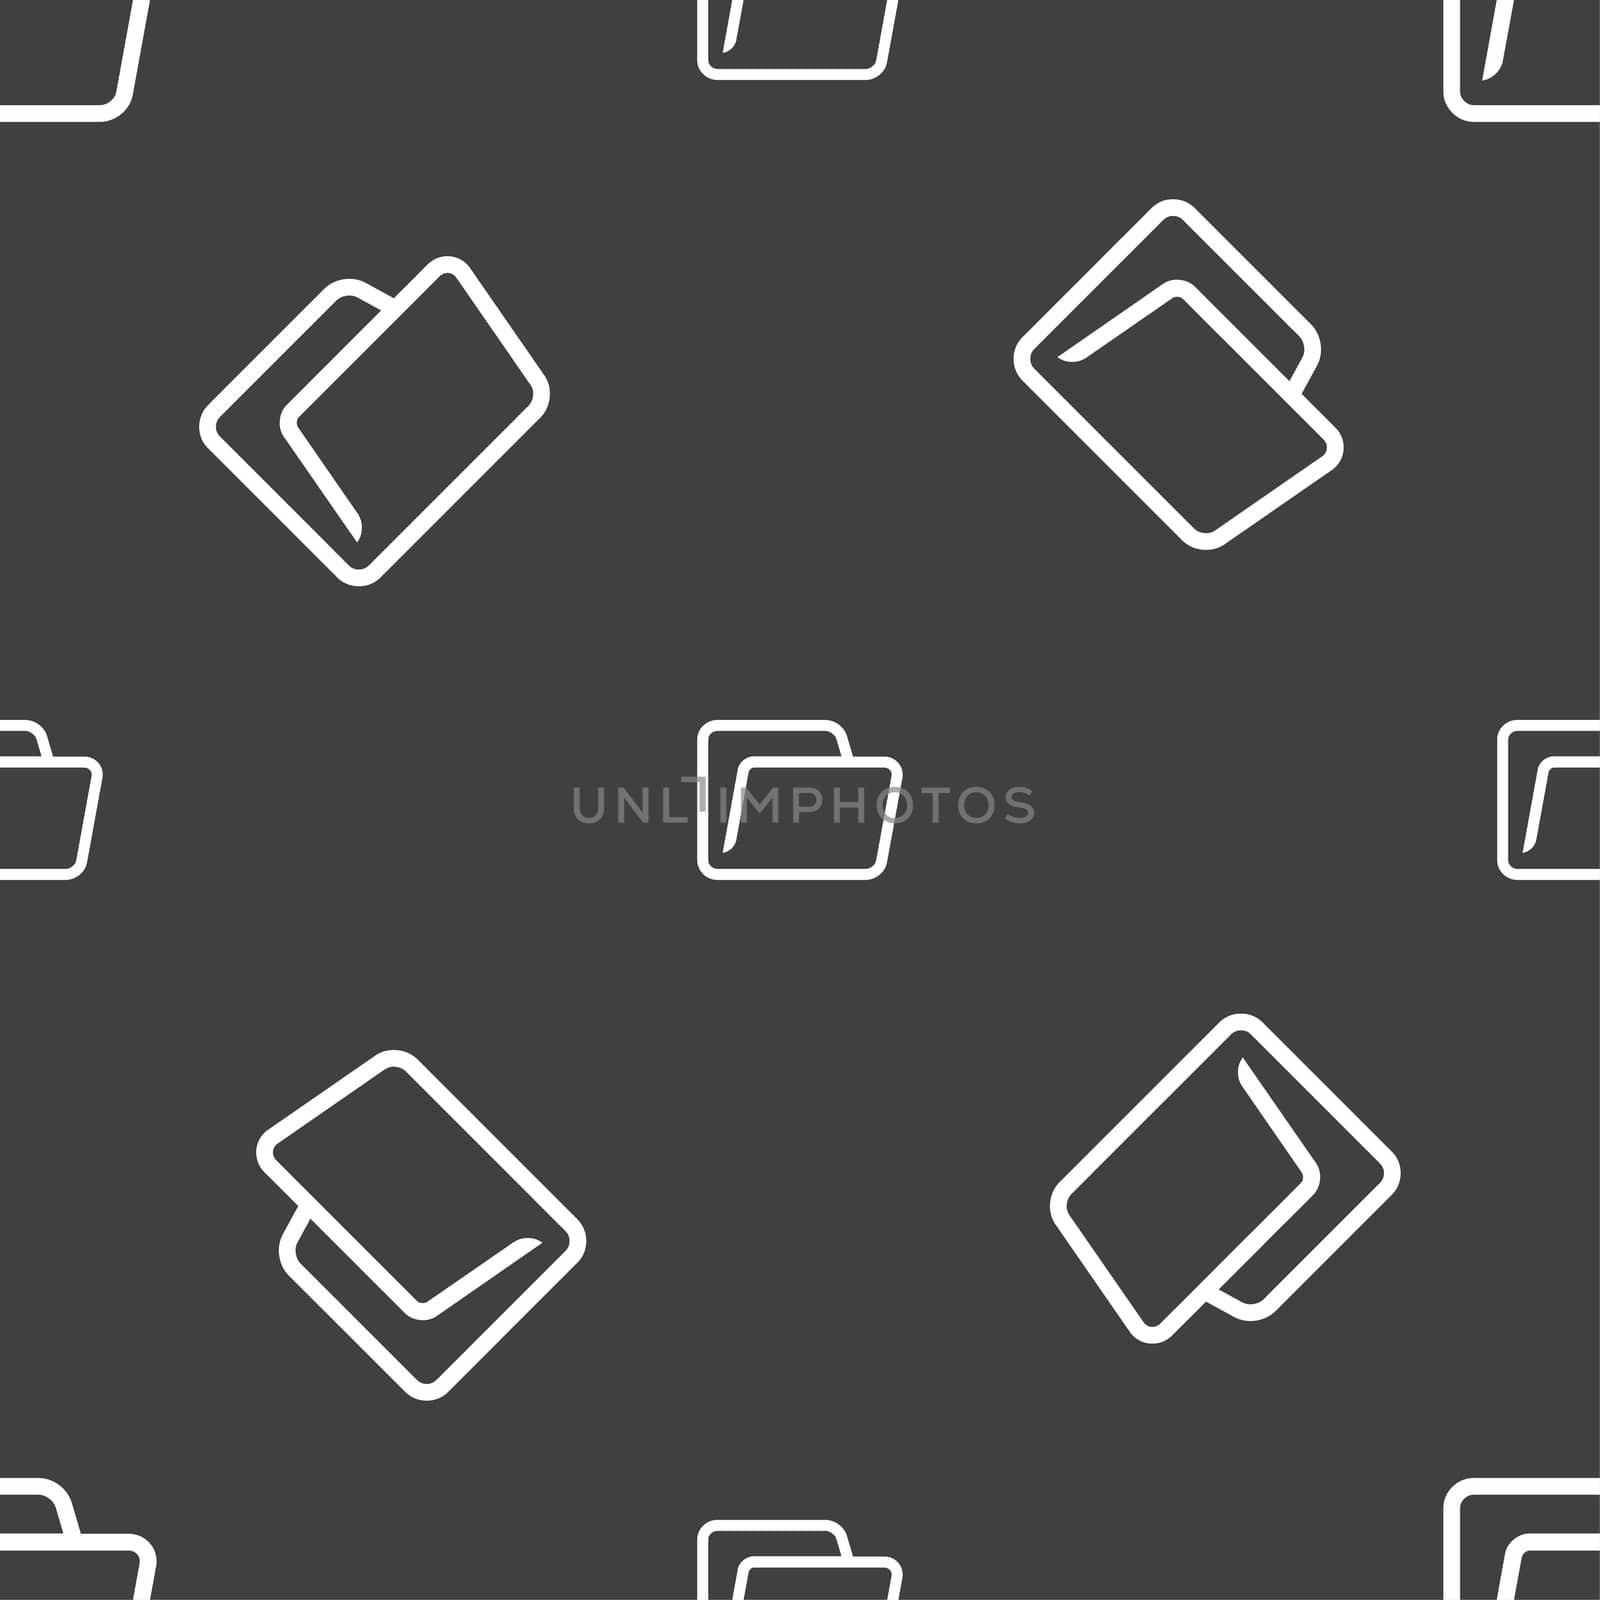 Folder icon sign. Seamless pattern on a gray background. illustration